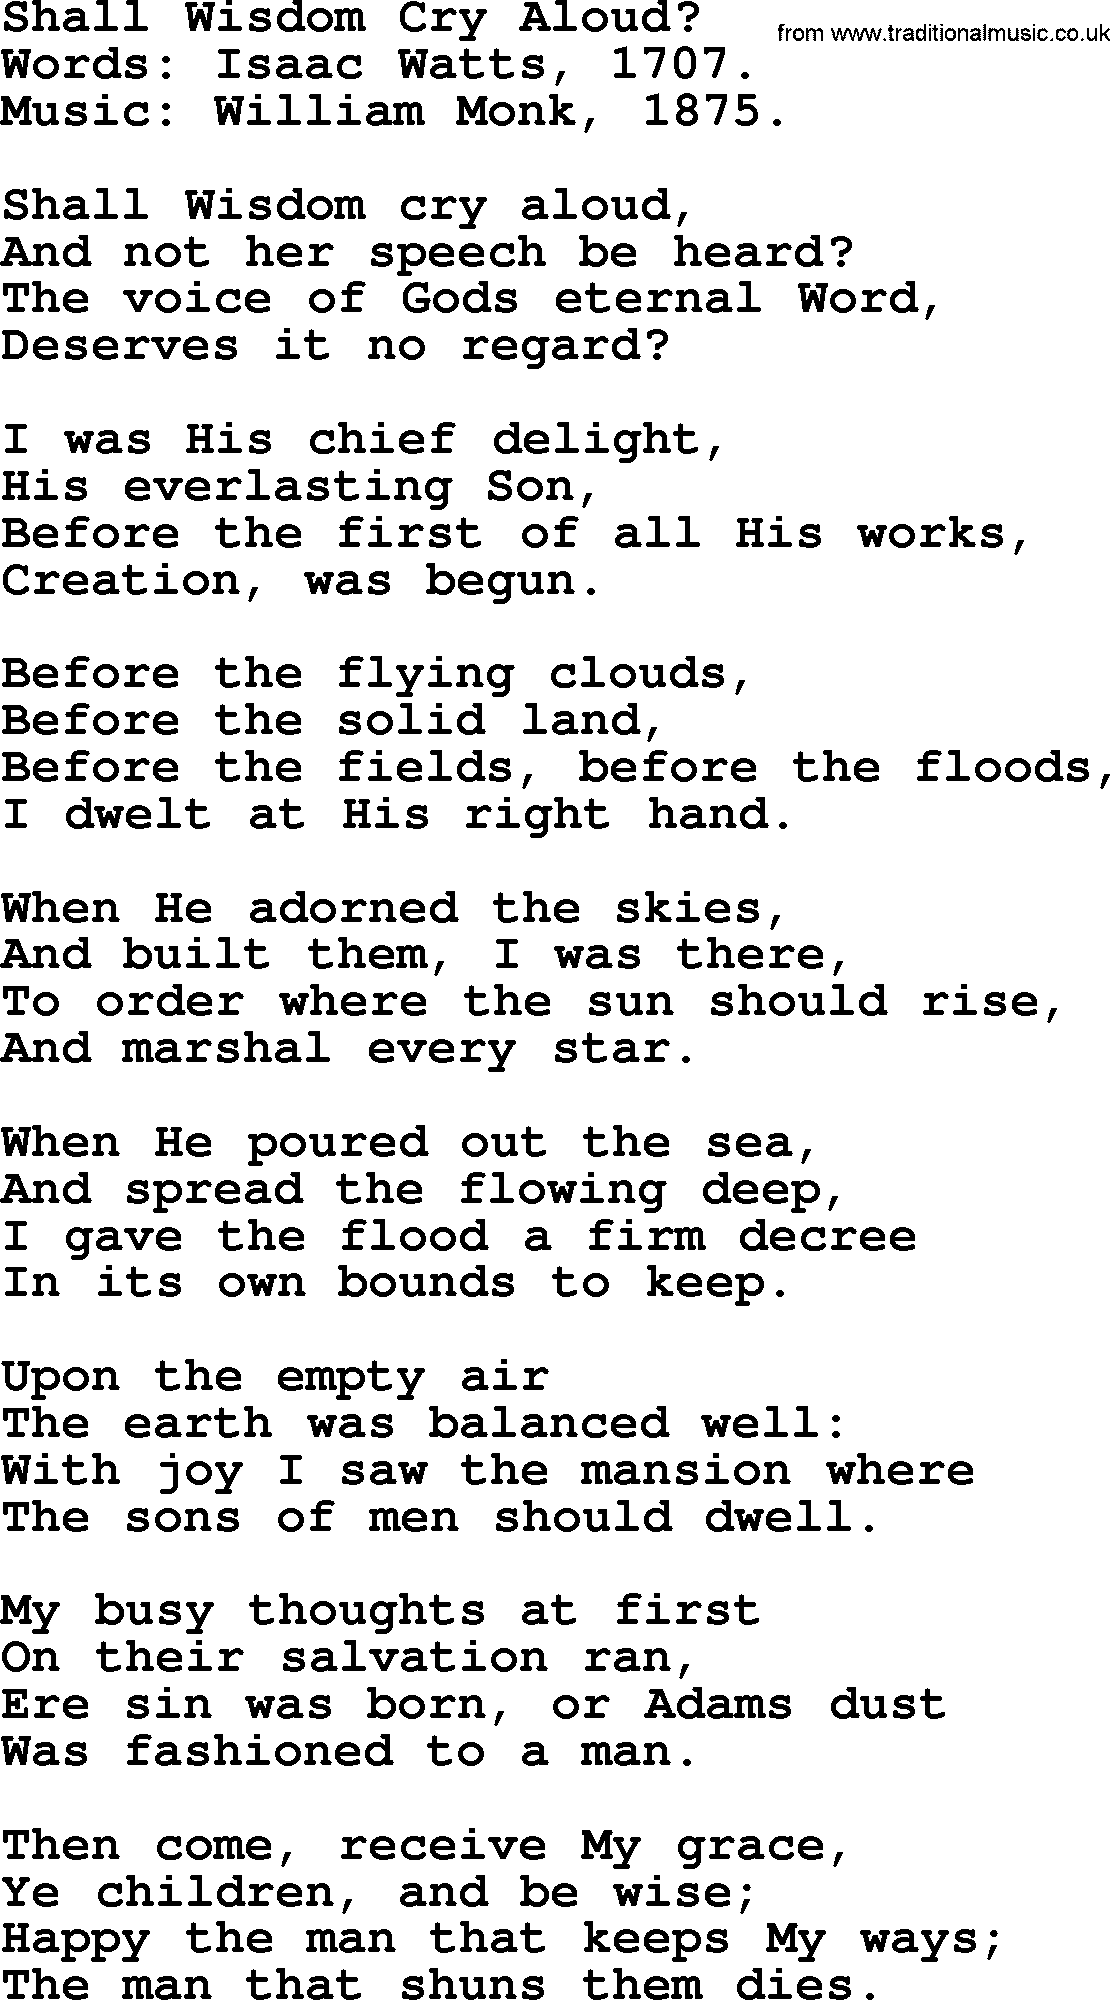 Isaac Watts Christian hymn: Shall Wisdom Cry Aloud_- lyricss